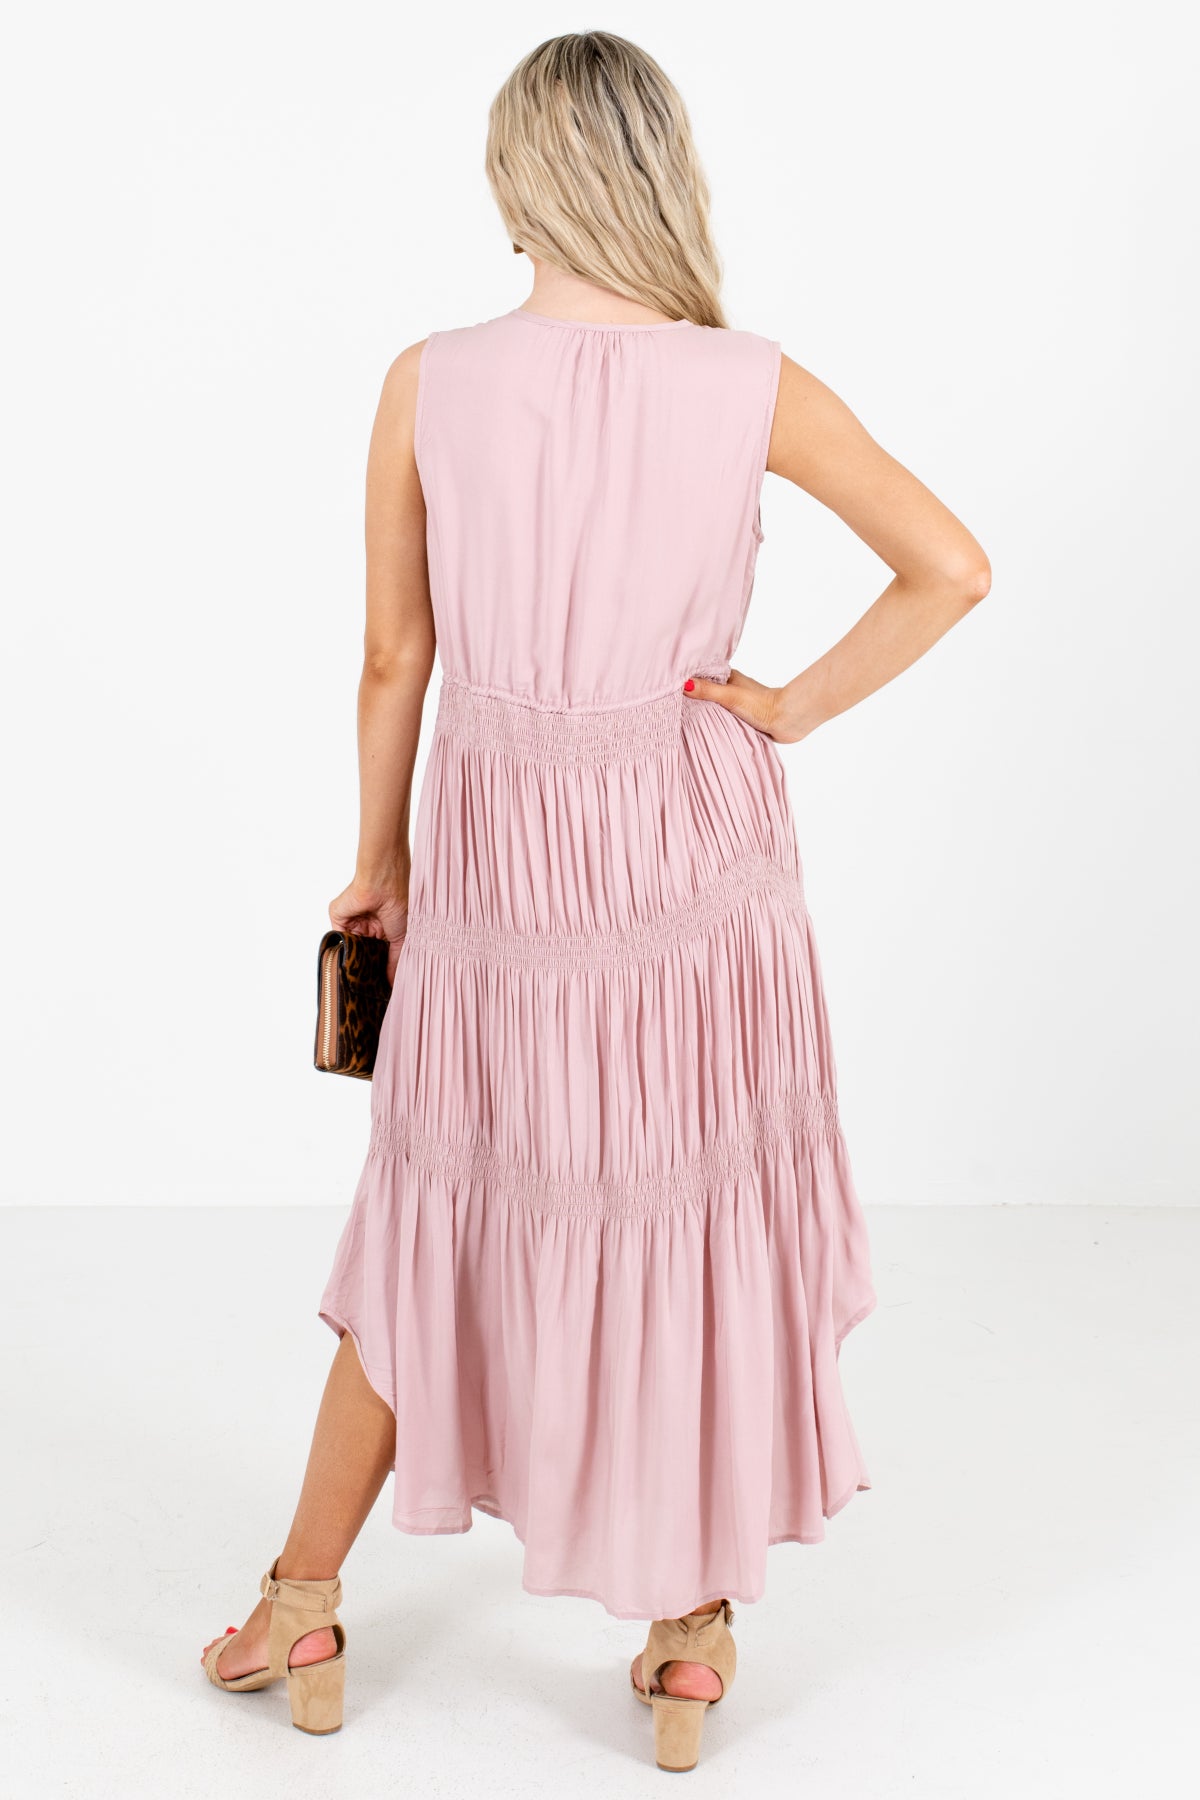 Women's Pink Pleated Skirt Boutique Maxi Dress